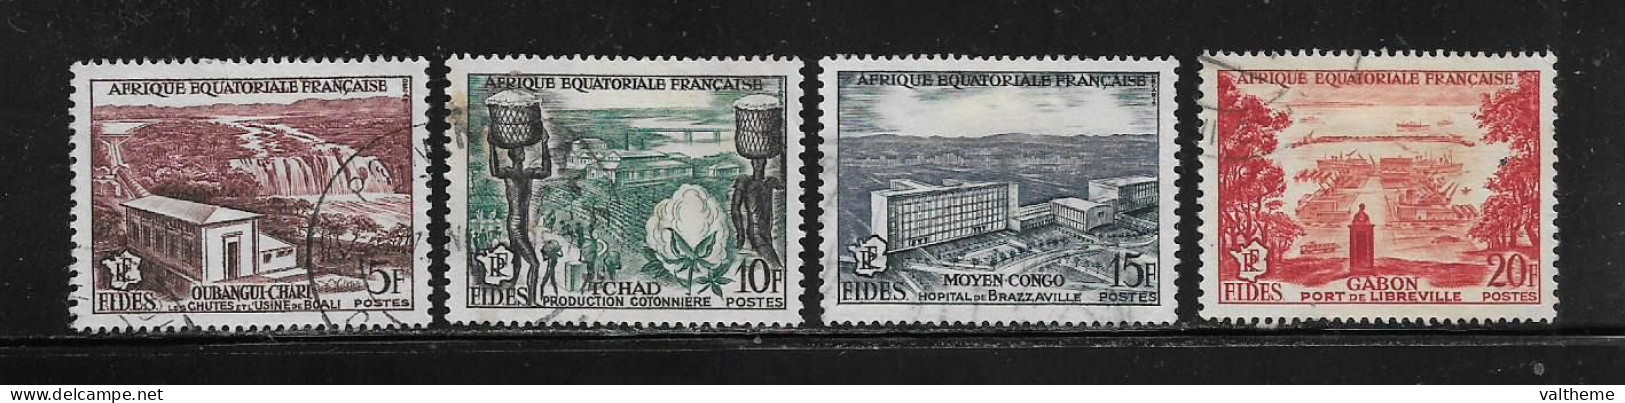 A.E.F.  (  DIV - 608 )   1956   N° YVERT ET TELLIER  N° 232/235 - Used Stamps